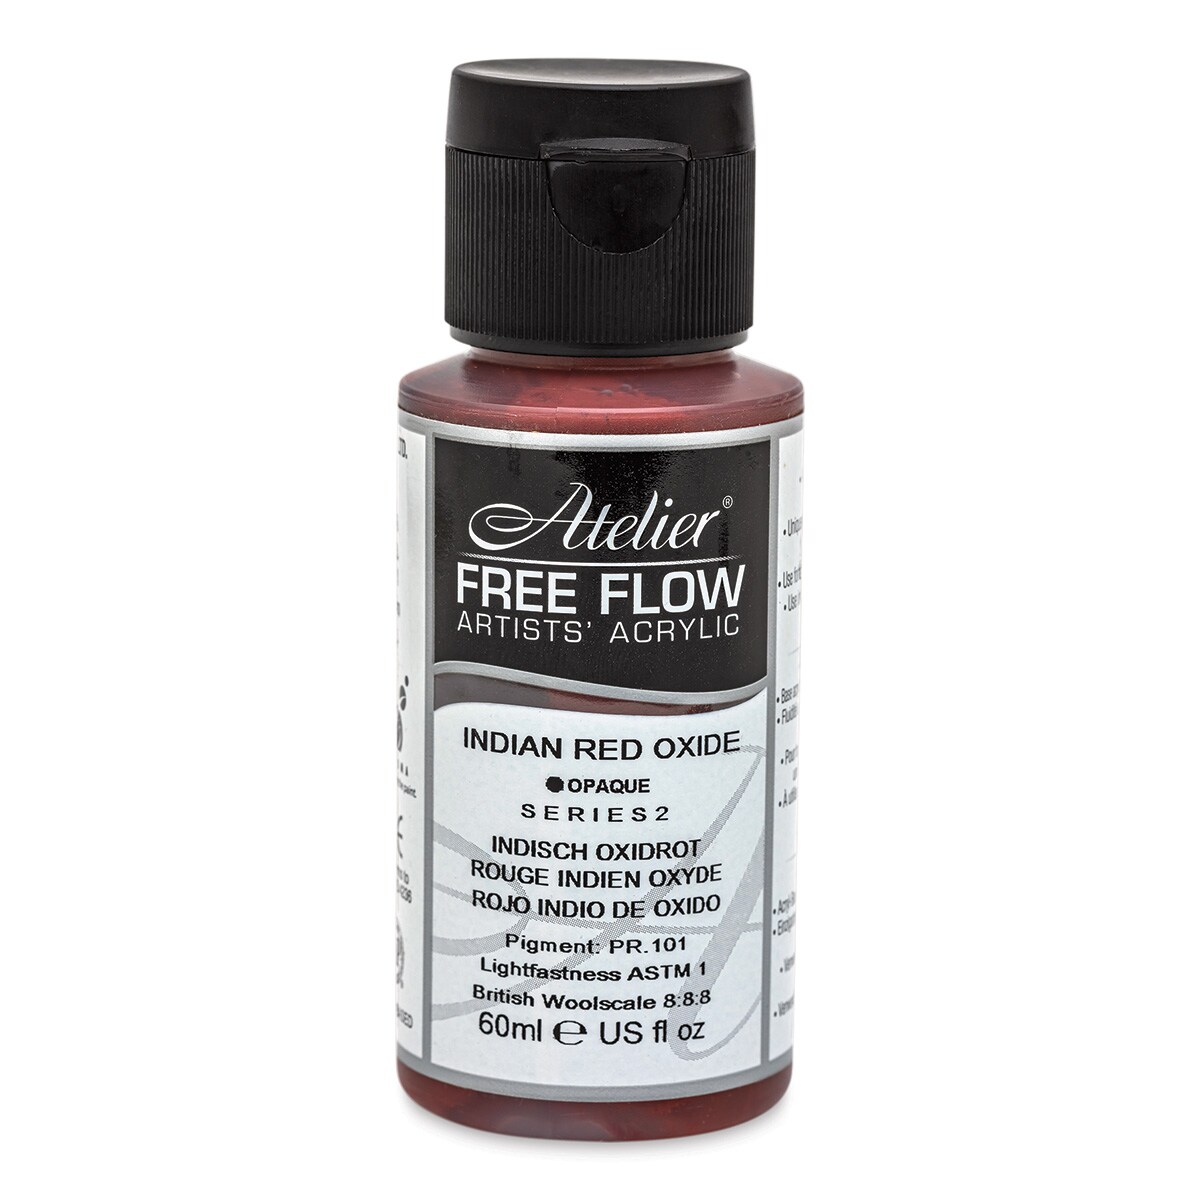 Chroma Atelier Free Flow Acrylic - Indian Red Oxide, 2oz bottle